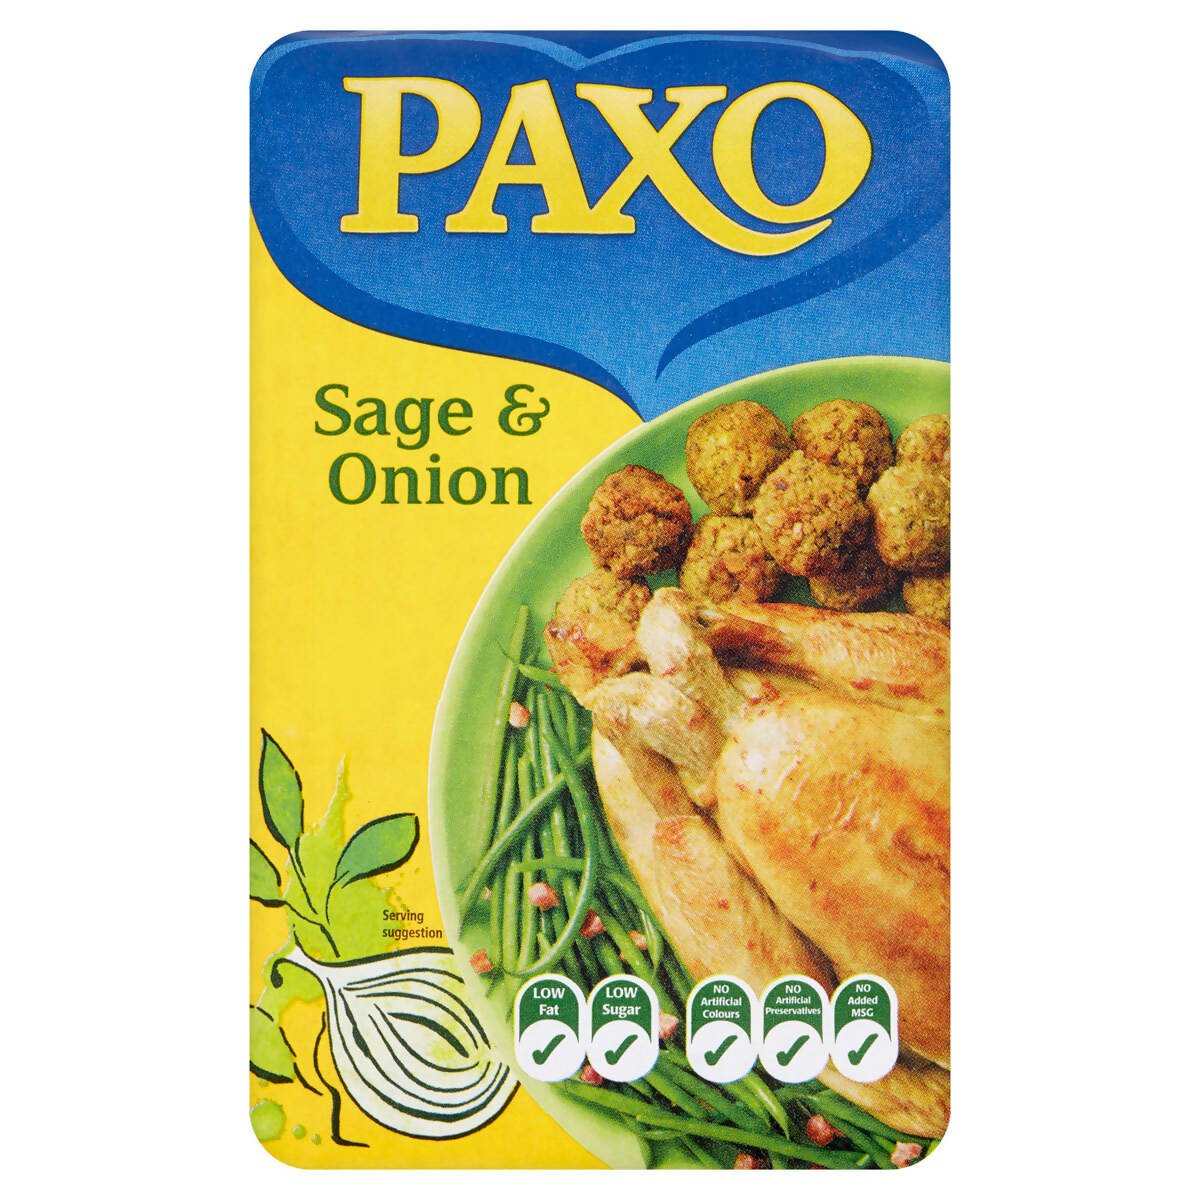 Paxo Sage & Onion Stuffing Mix, 1kg Home Baking Costco UK   